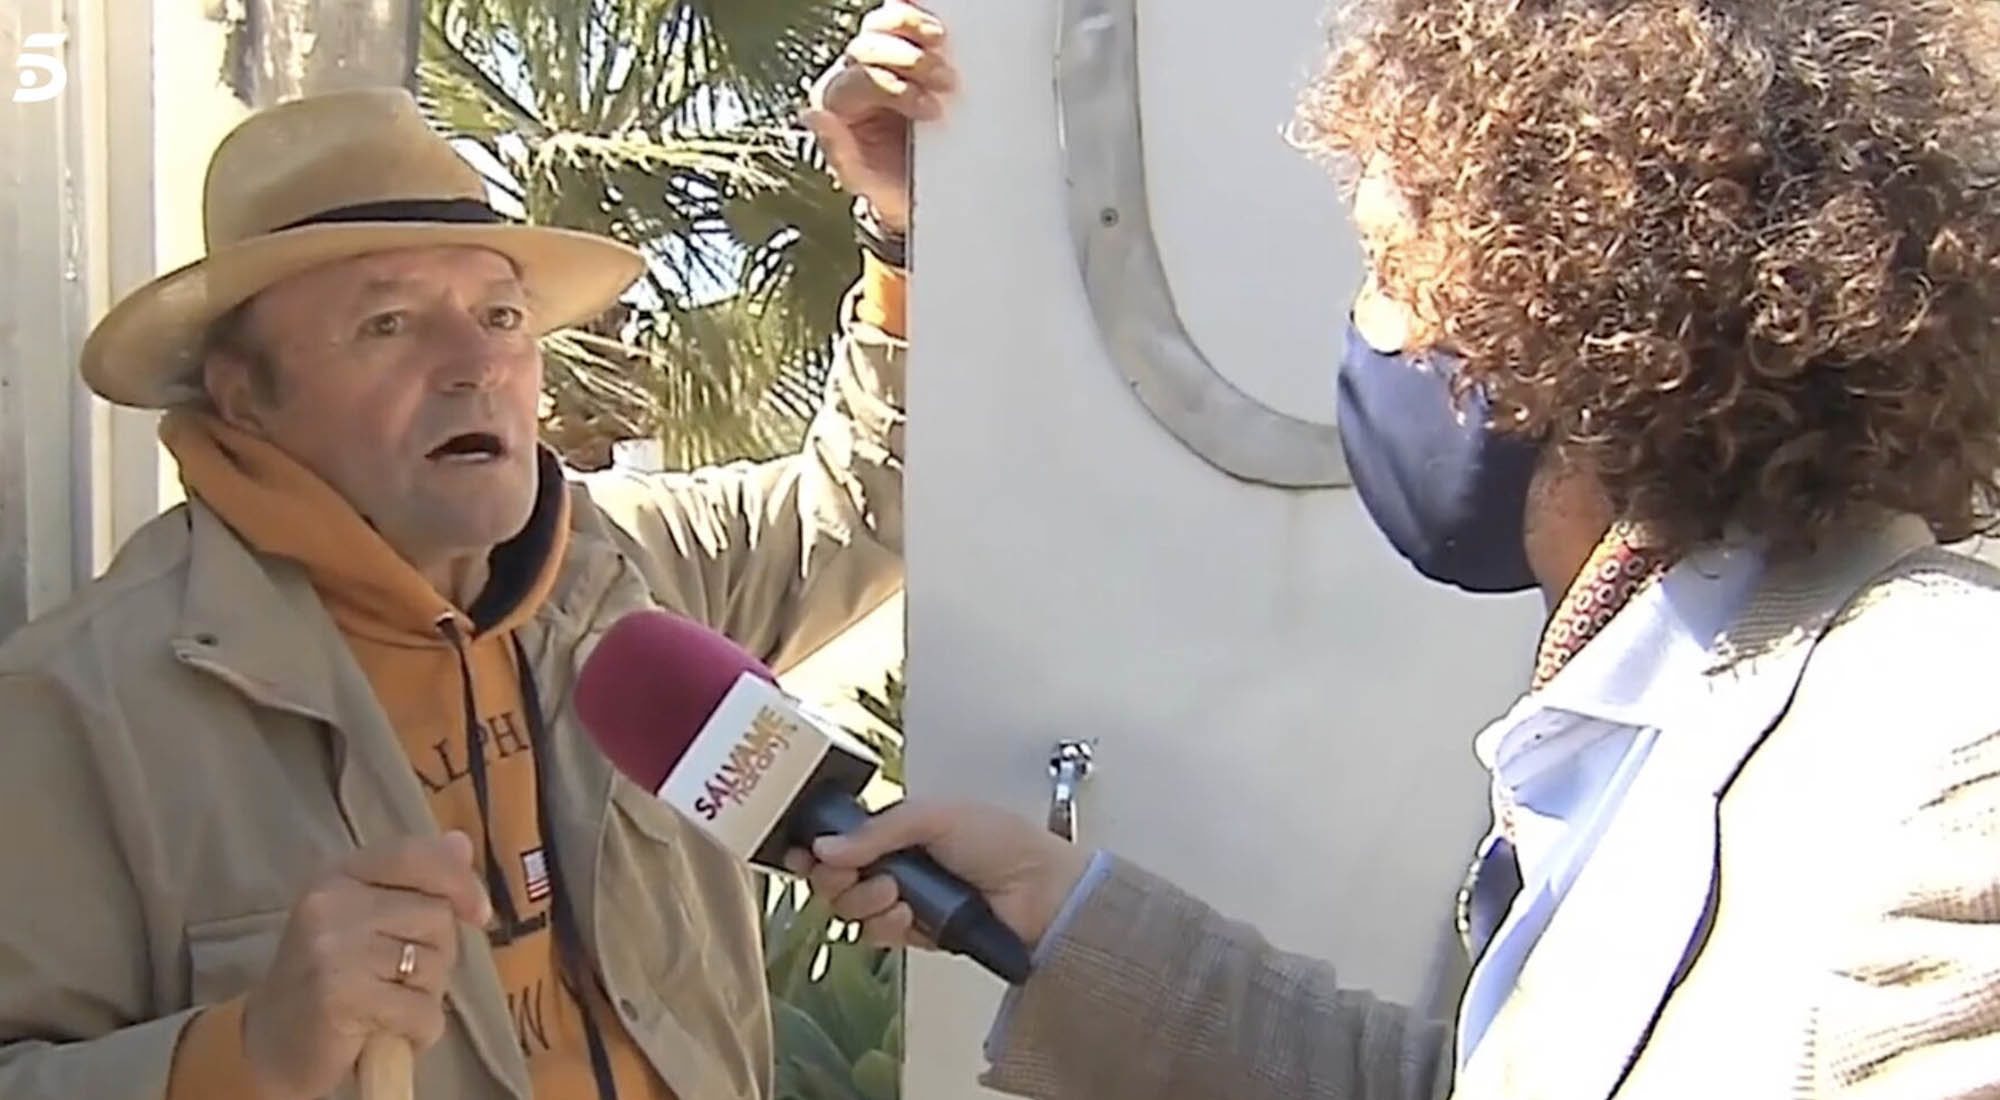 Amador Mohedano siendo entrevistado por un reportero de 'Sálvame'